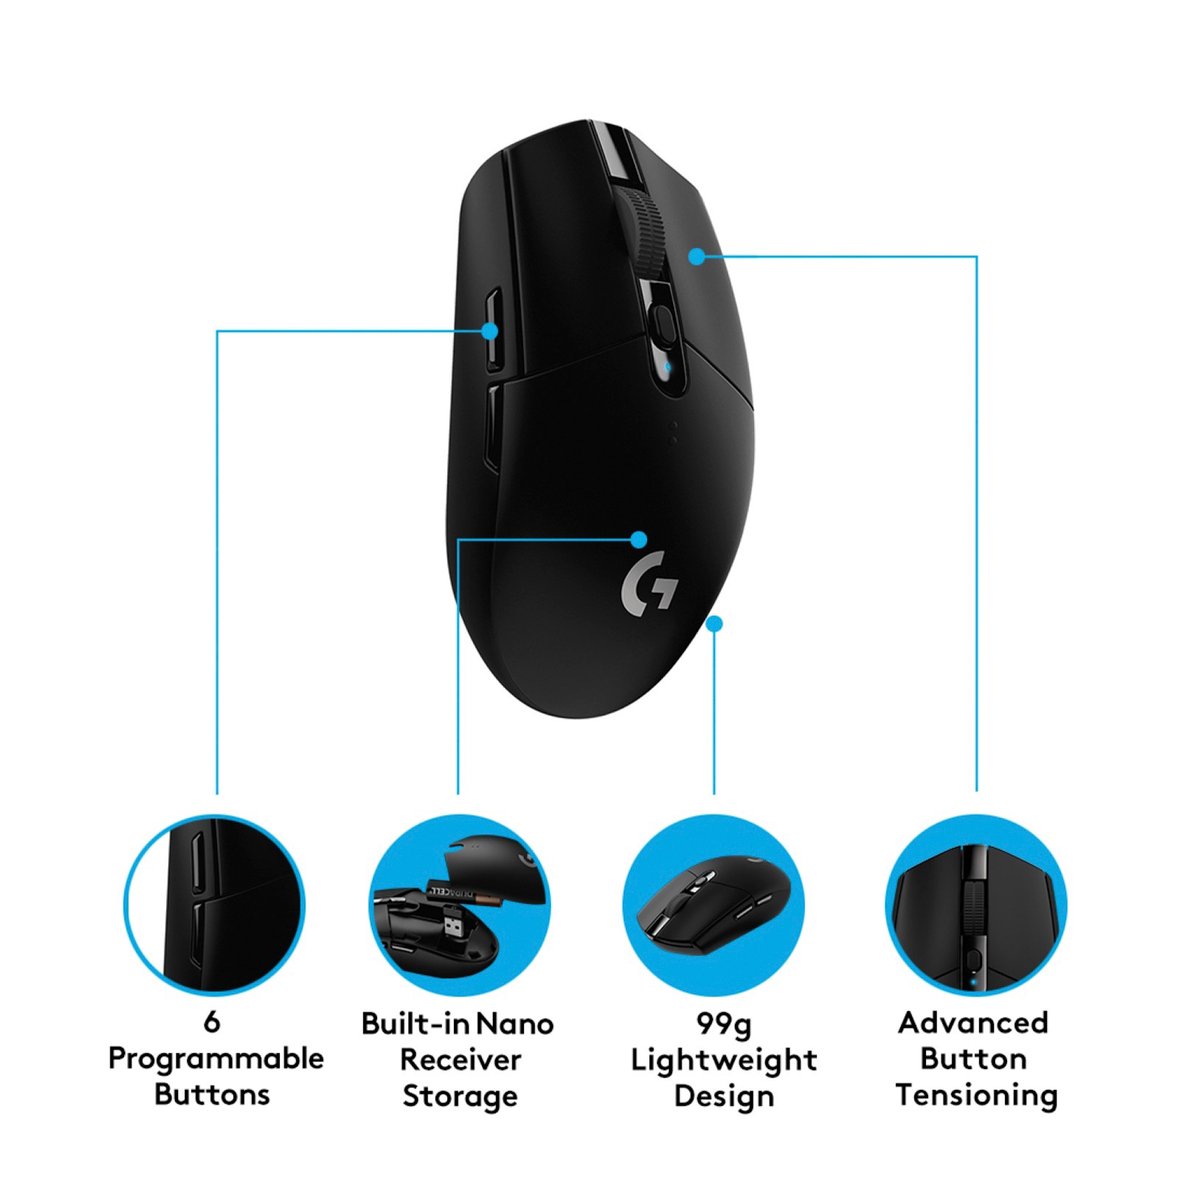 Logitech G305 LIGHTSPEED Wireless Gaming Mouse - BLACK - USB